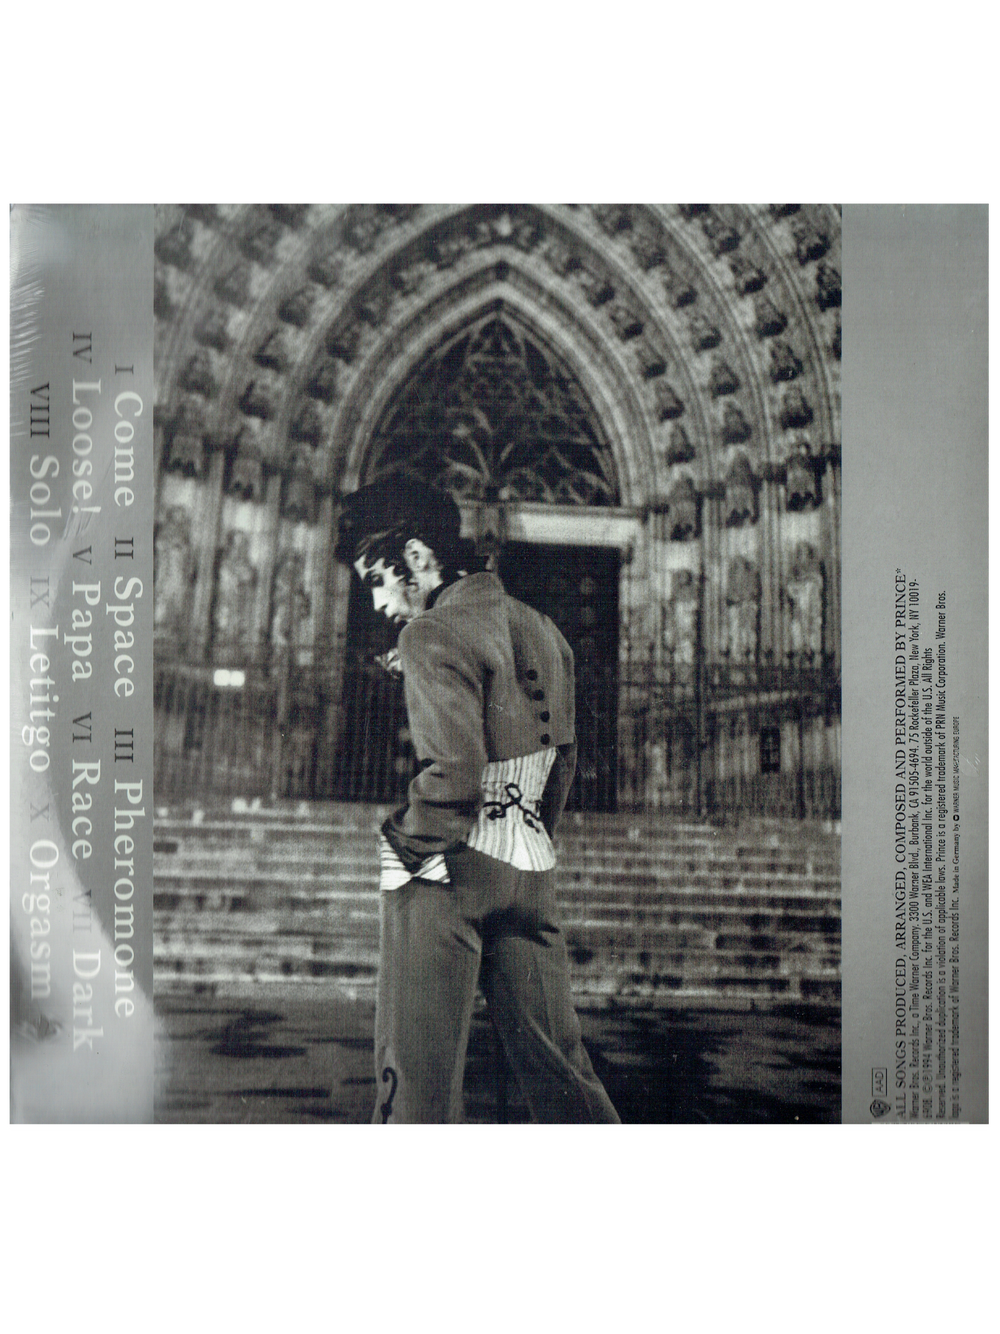 Prince – 1958 - 1993 Come vinyl Album UK/EU 1994 Original Release STILL SEALED